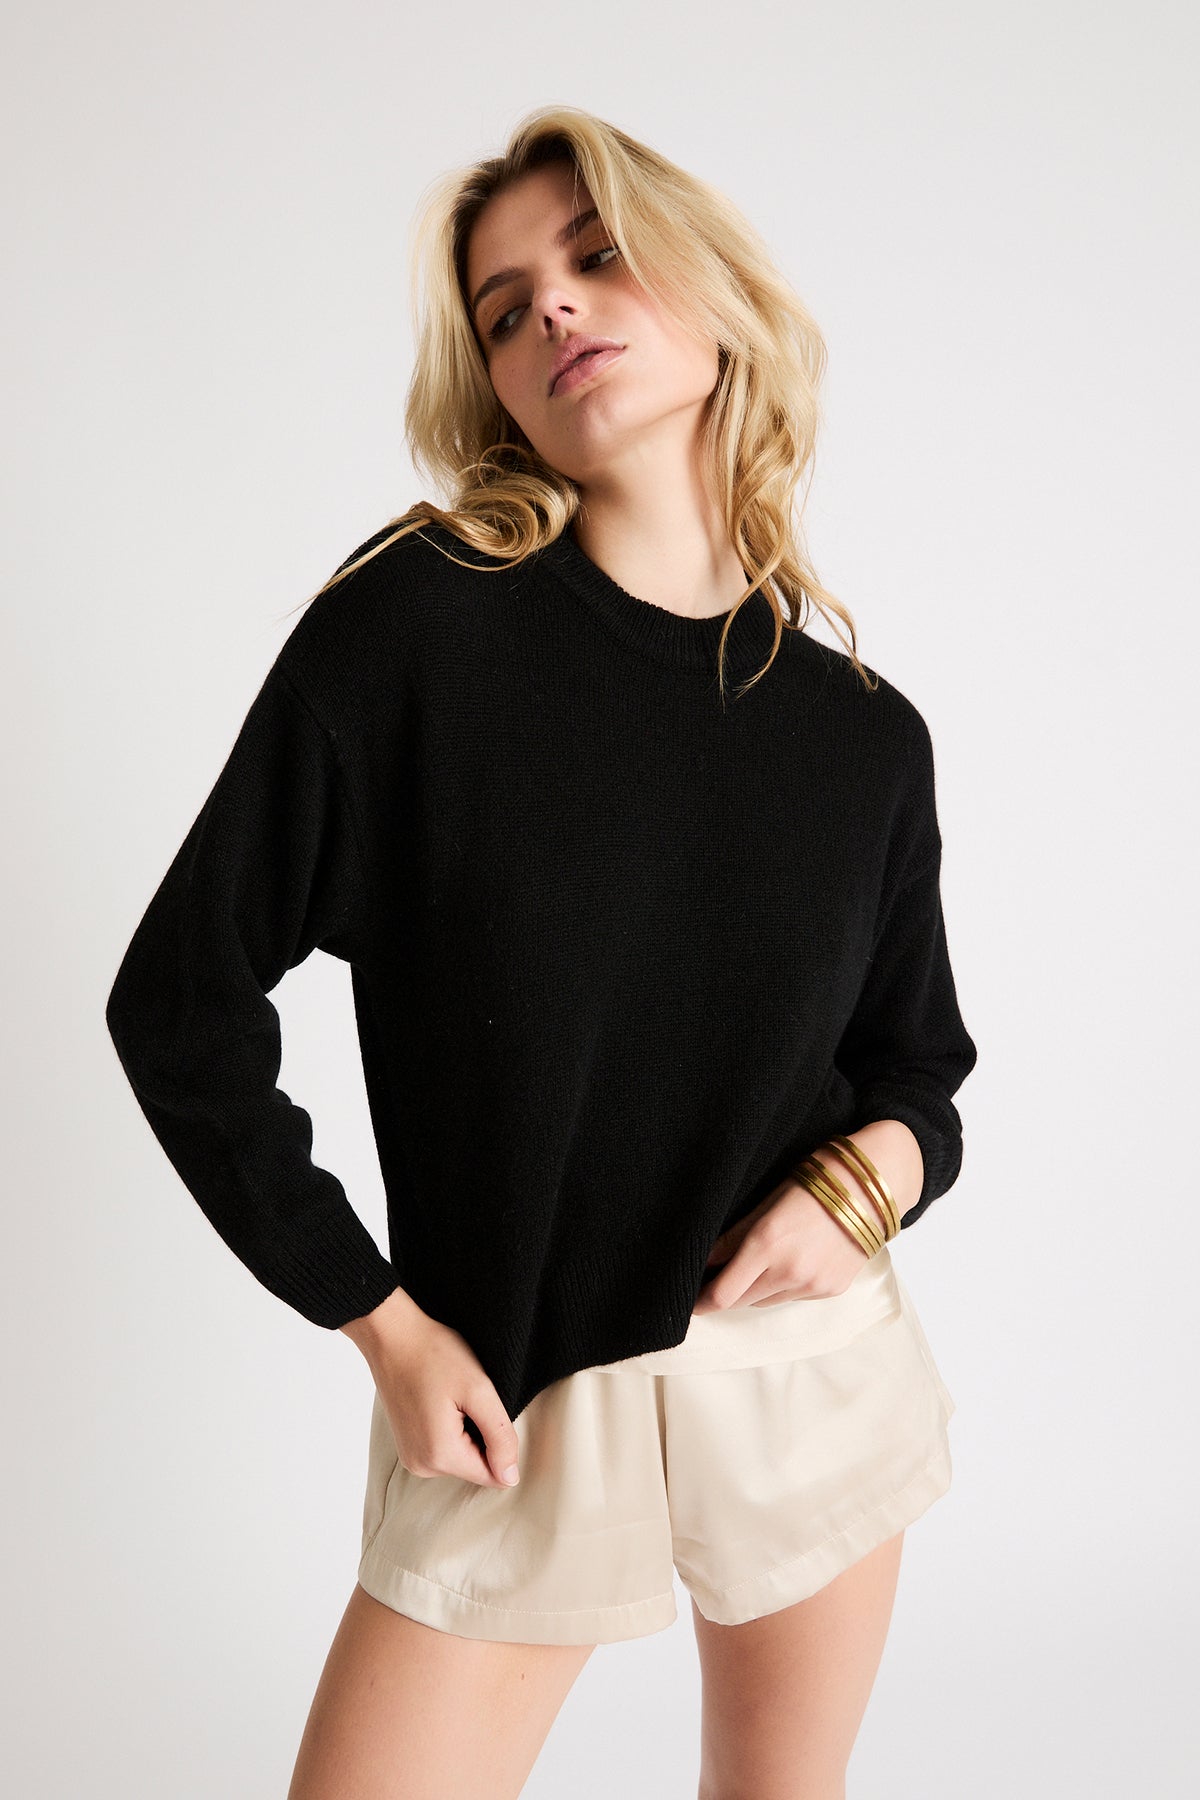 + Beryll Madison Cashmere Sweater | Black Rock - +Cashmere Sweater Madison | Black Rock - +Beryll Worn By Good People